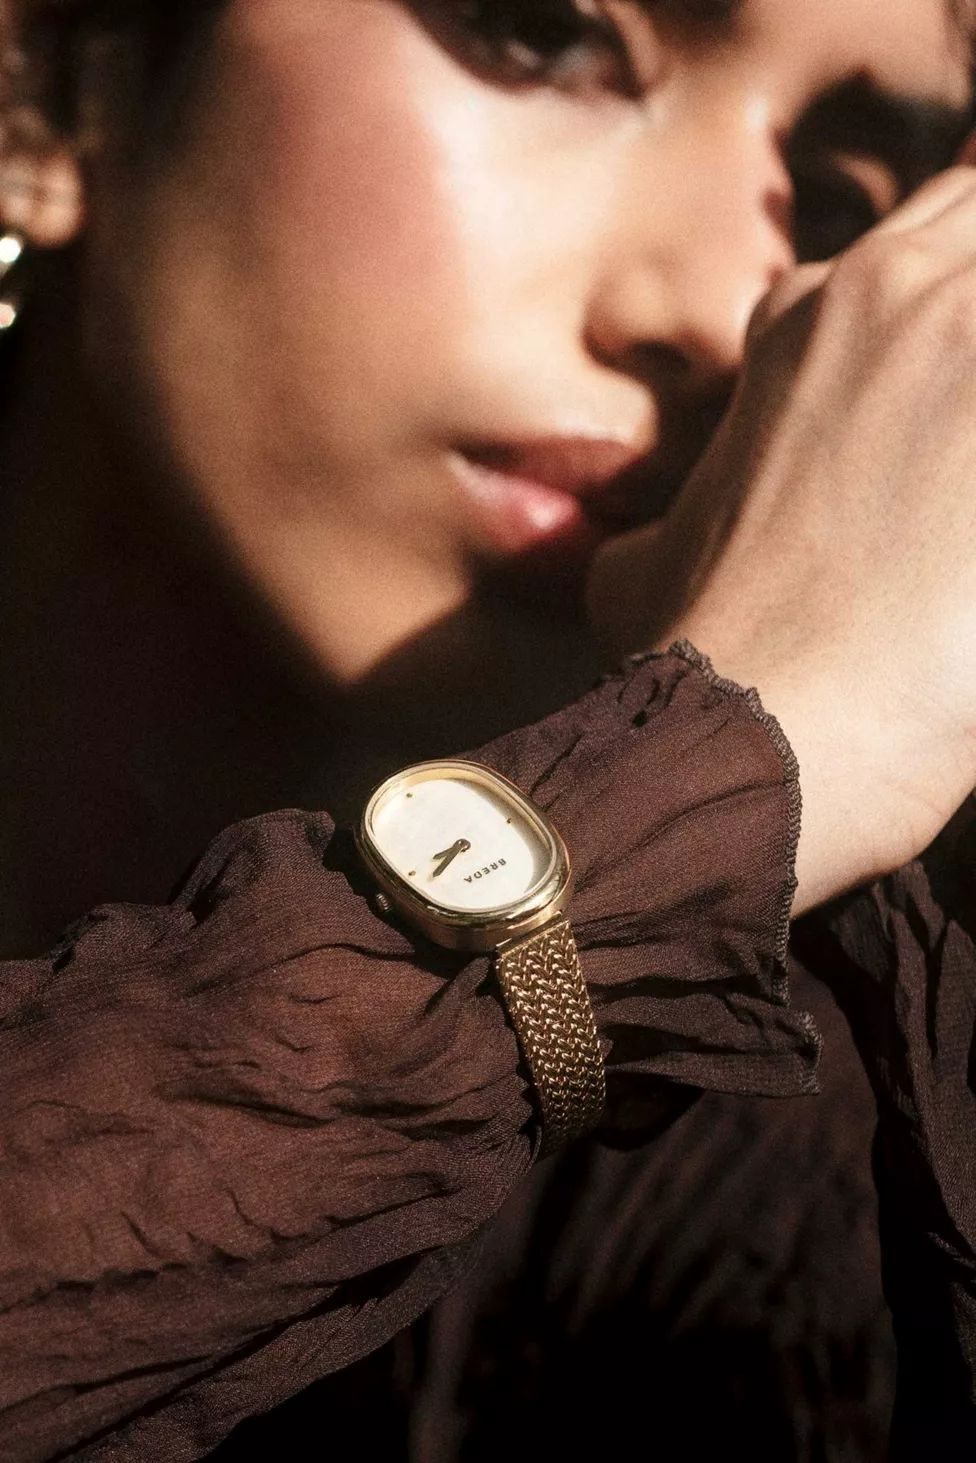 BREDA Jane Tethered Mesh Bracelet Analog Quartz Watch | Urban Outfitters (US and RoW)